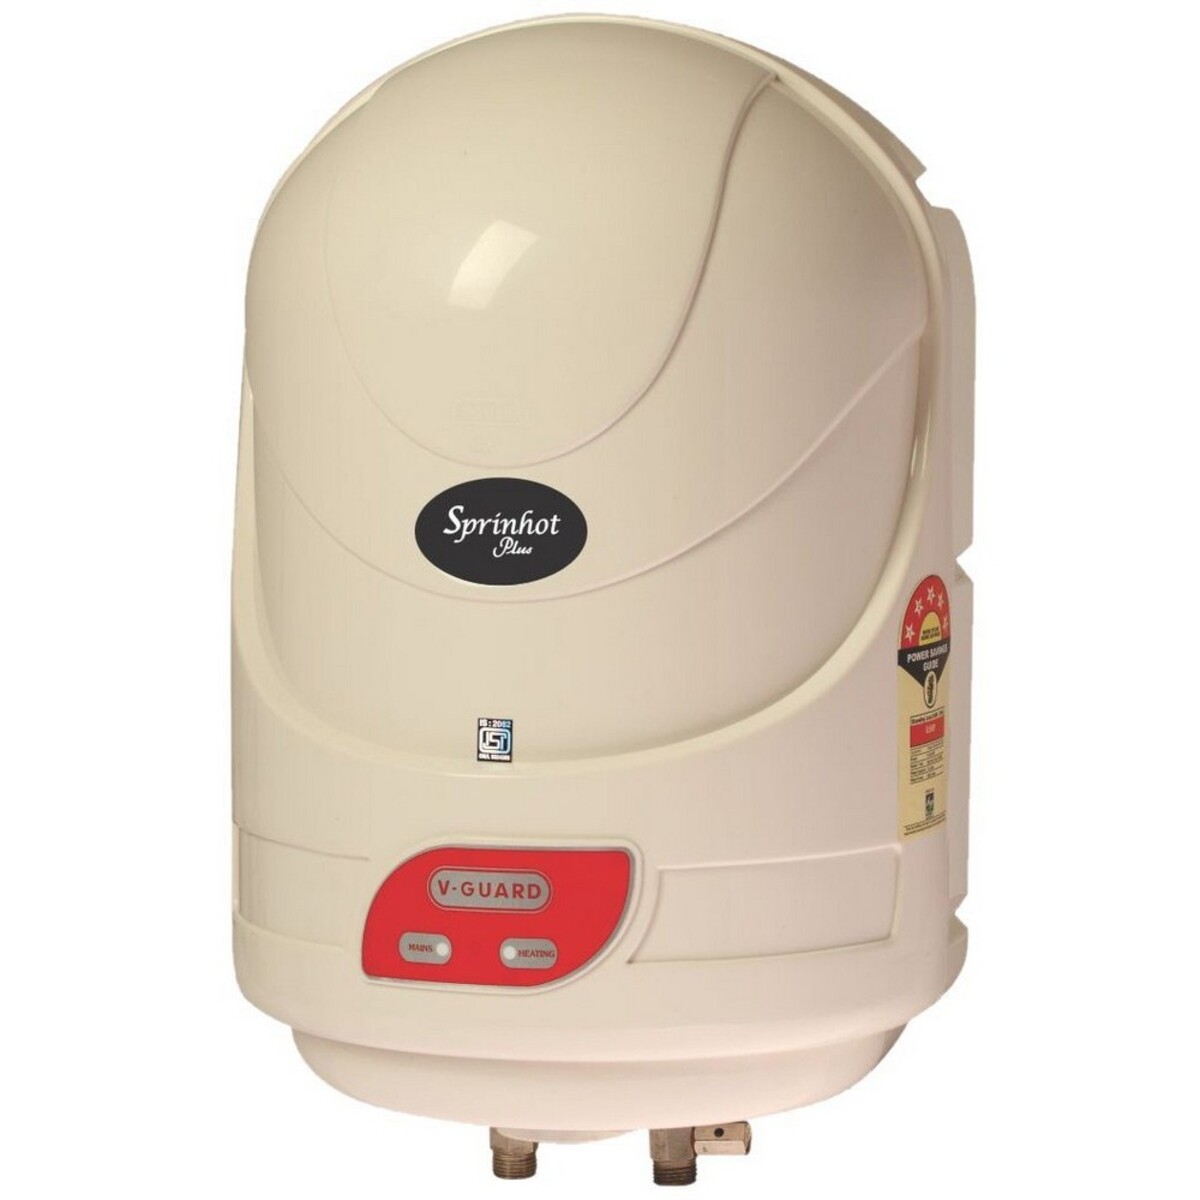 V-Guard Water Heater Sprinhot Plus 10 Ltr